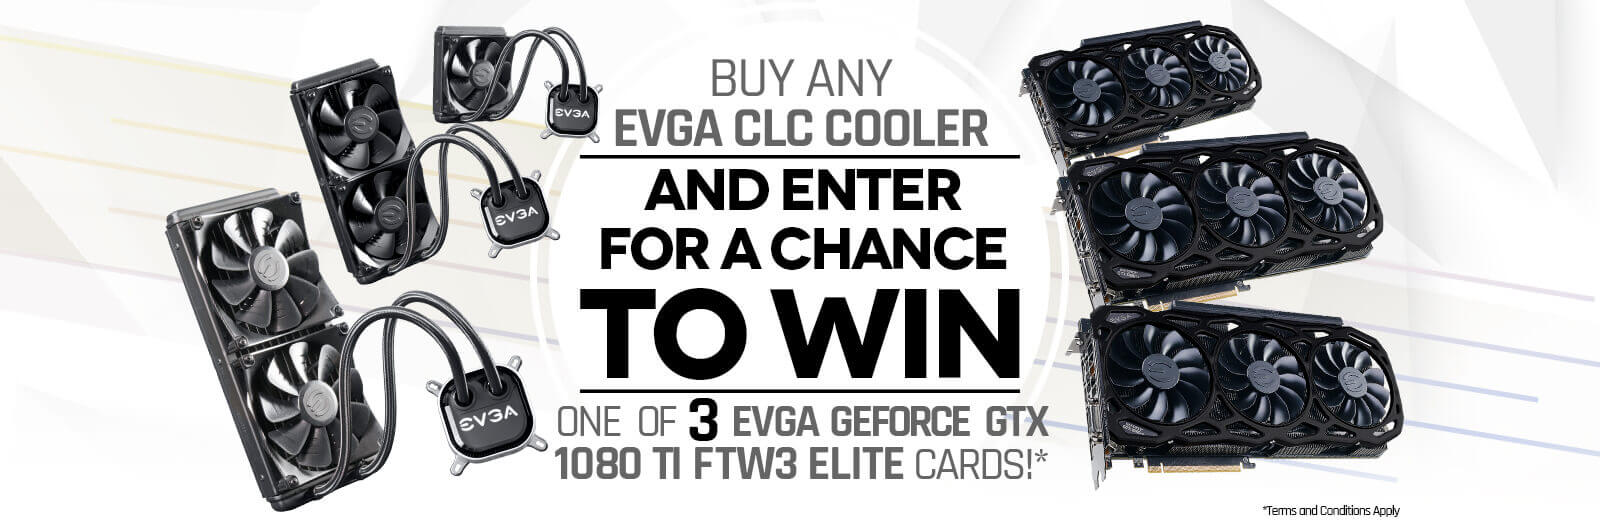 Buy EVGA CLC Enter To Win One Of 3 EVGA GeForce GTX 1080 Ti FTW3 ELITE Graphics Cards